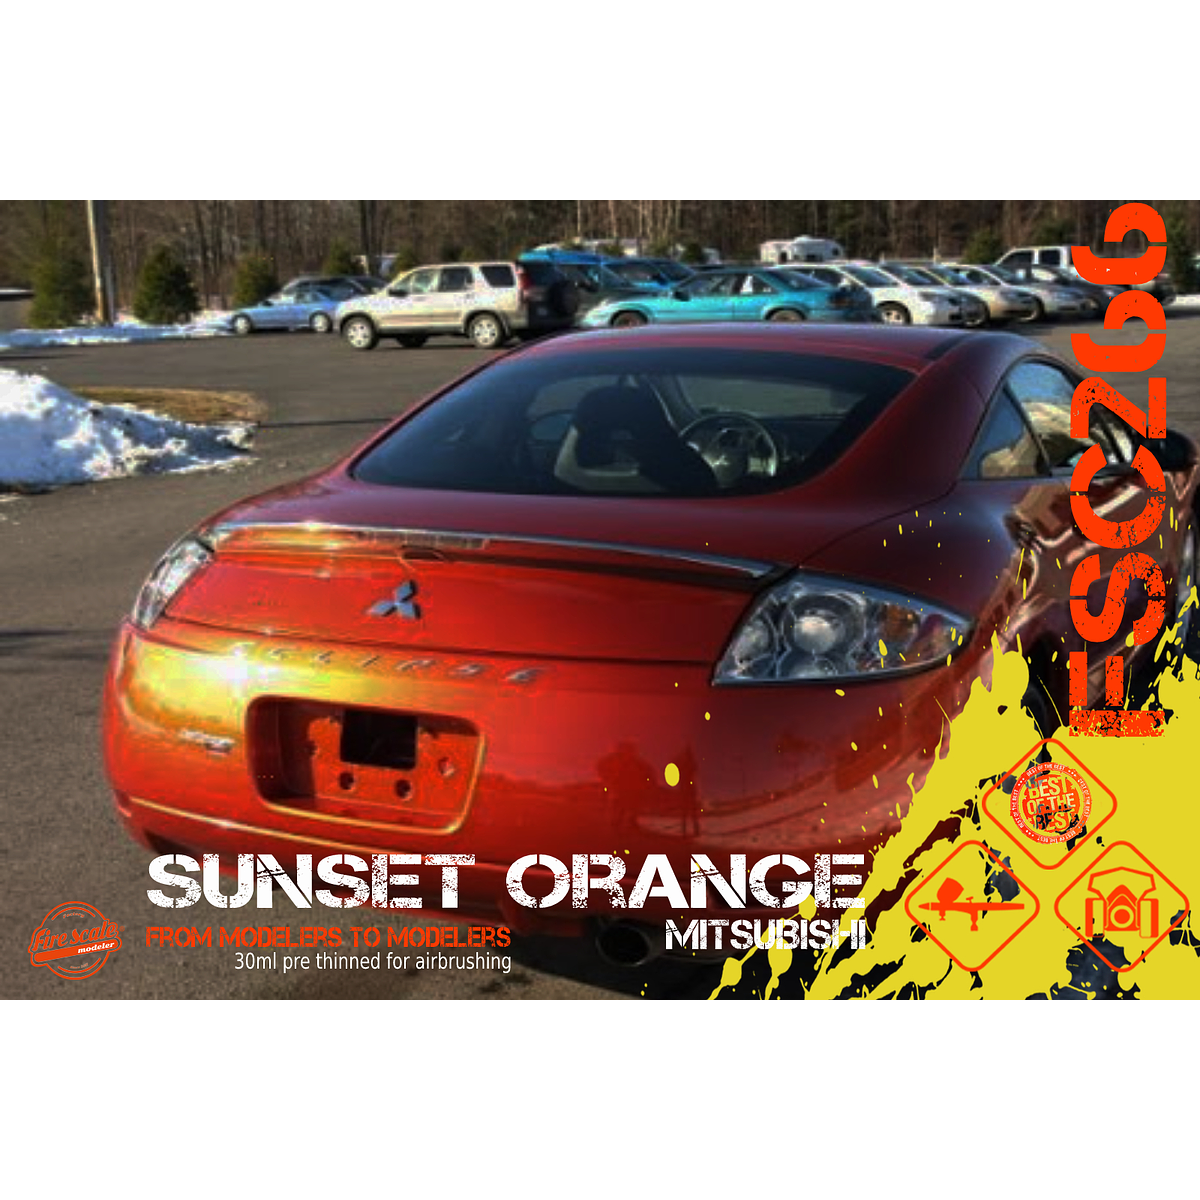 Sunset Orange Mitsubishi